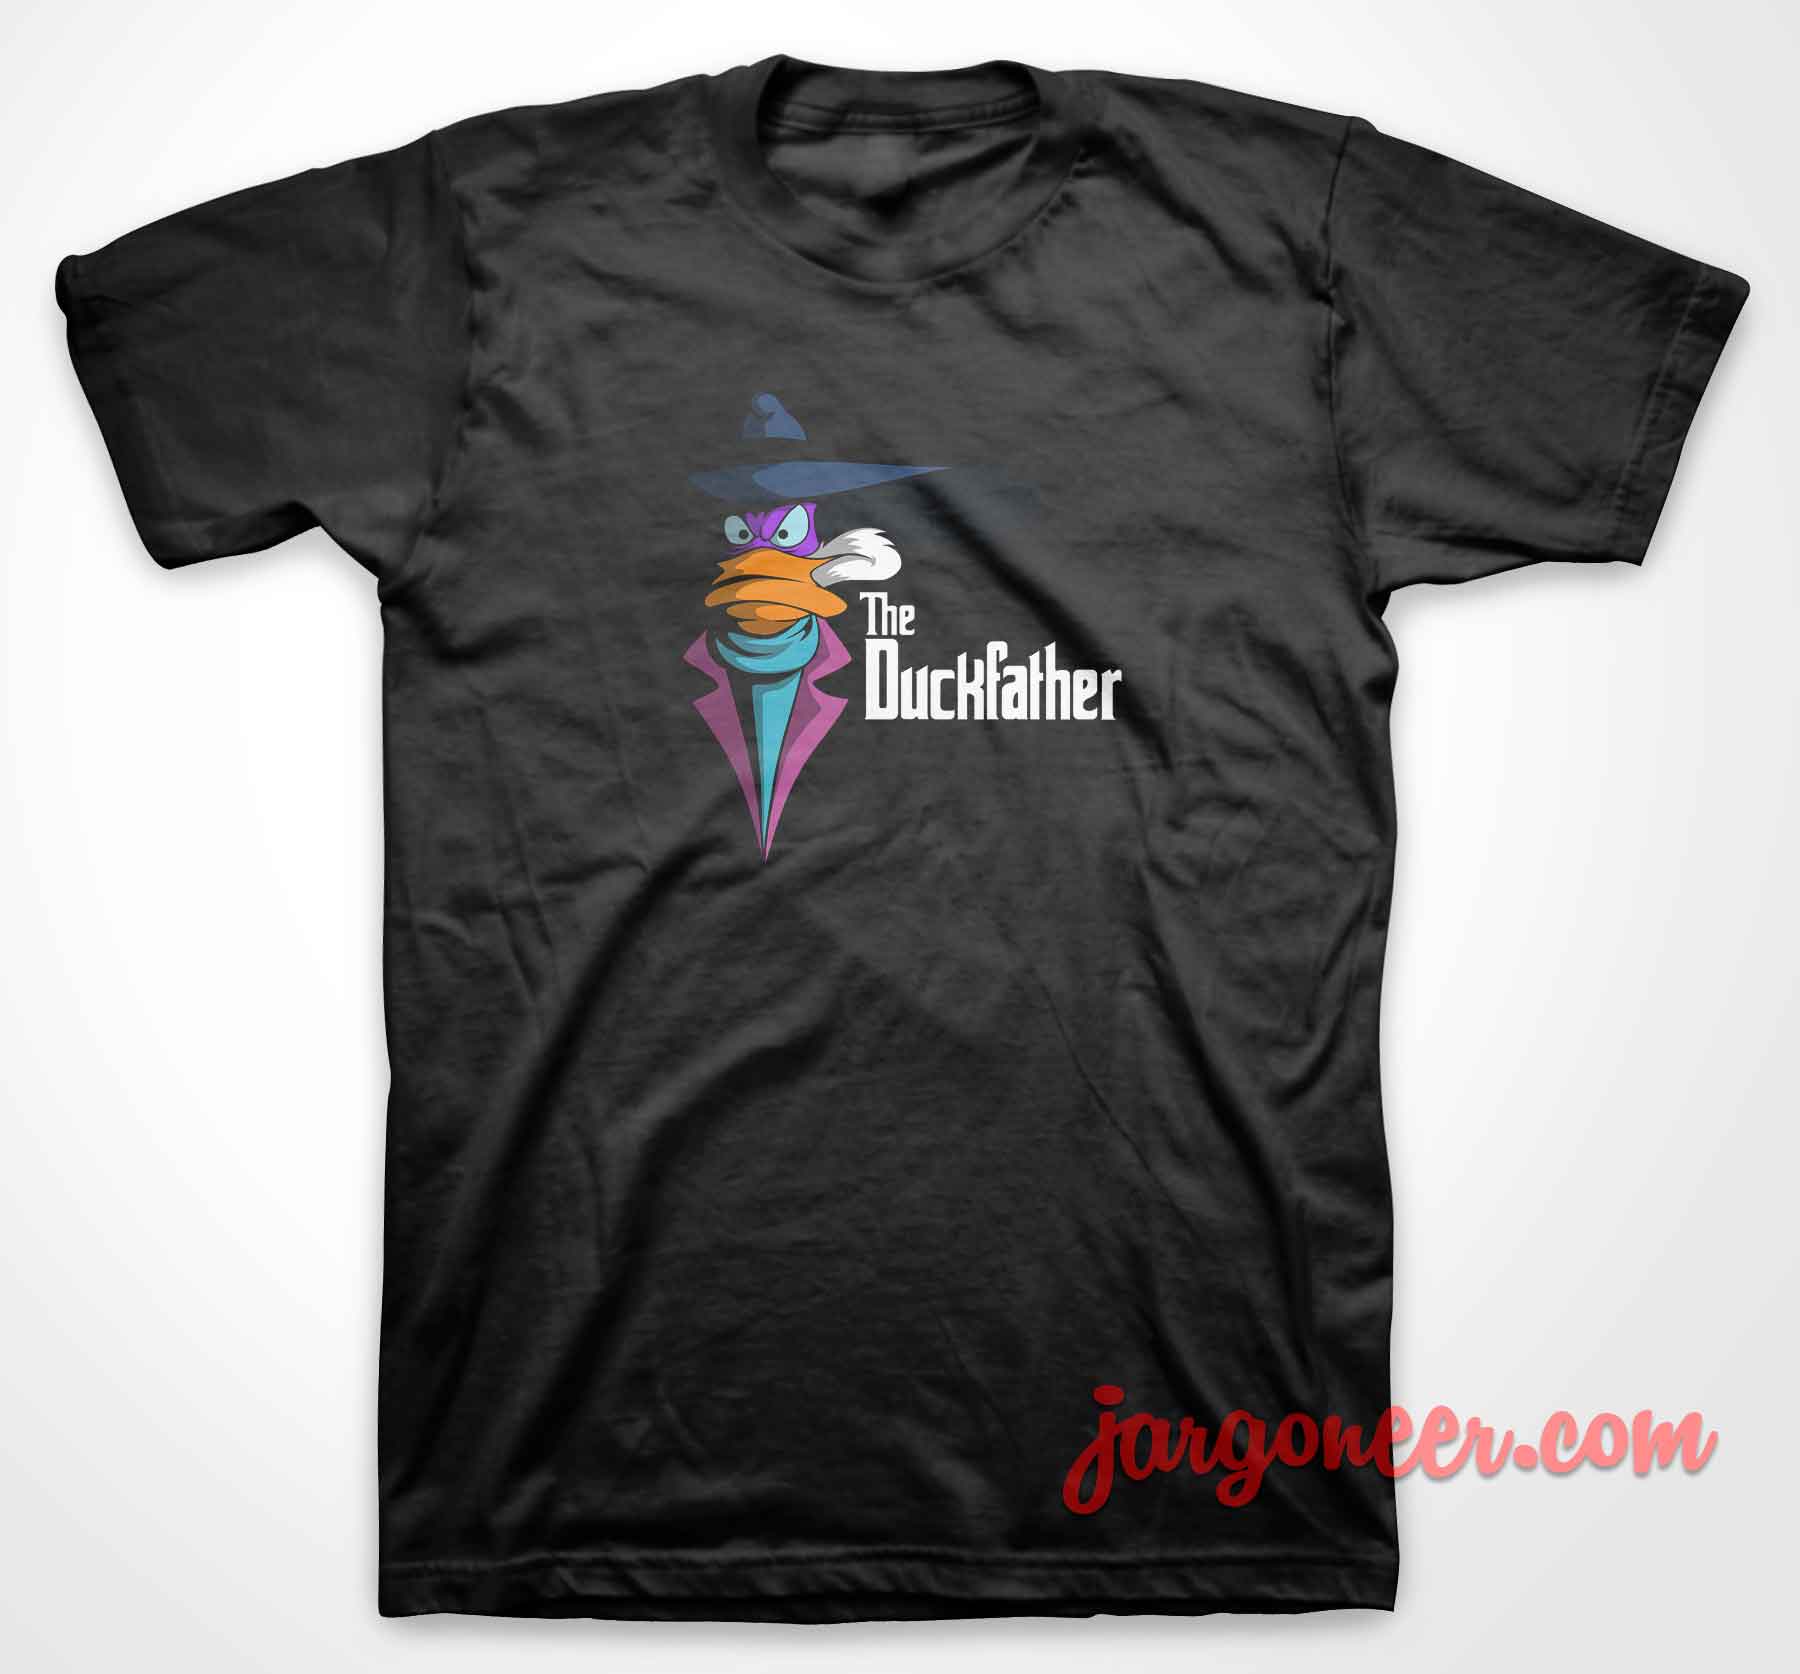 The DuckFather - Shop Unique Graphic Cool Shirt Designs